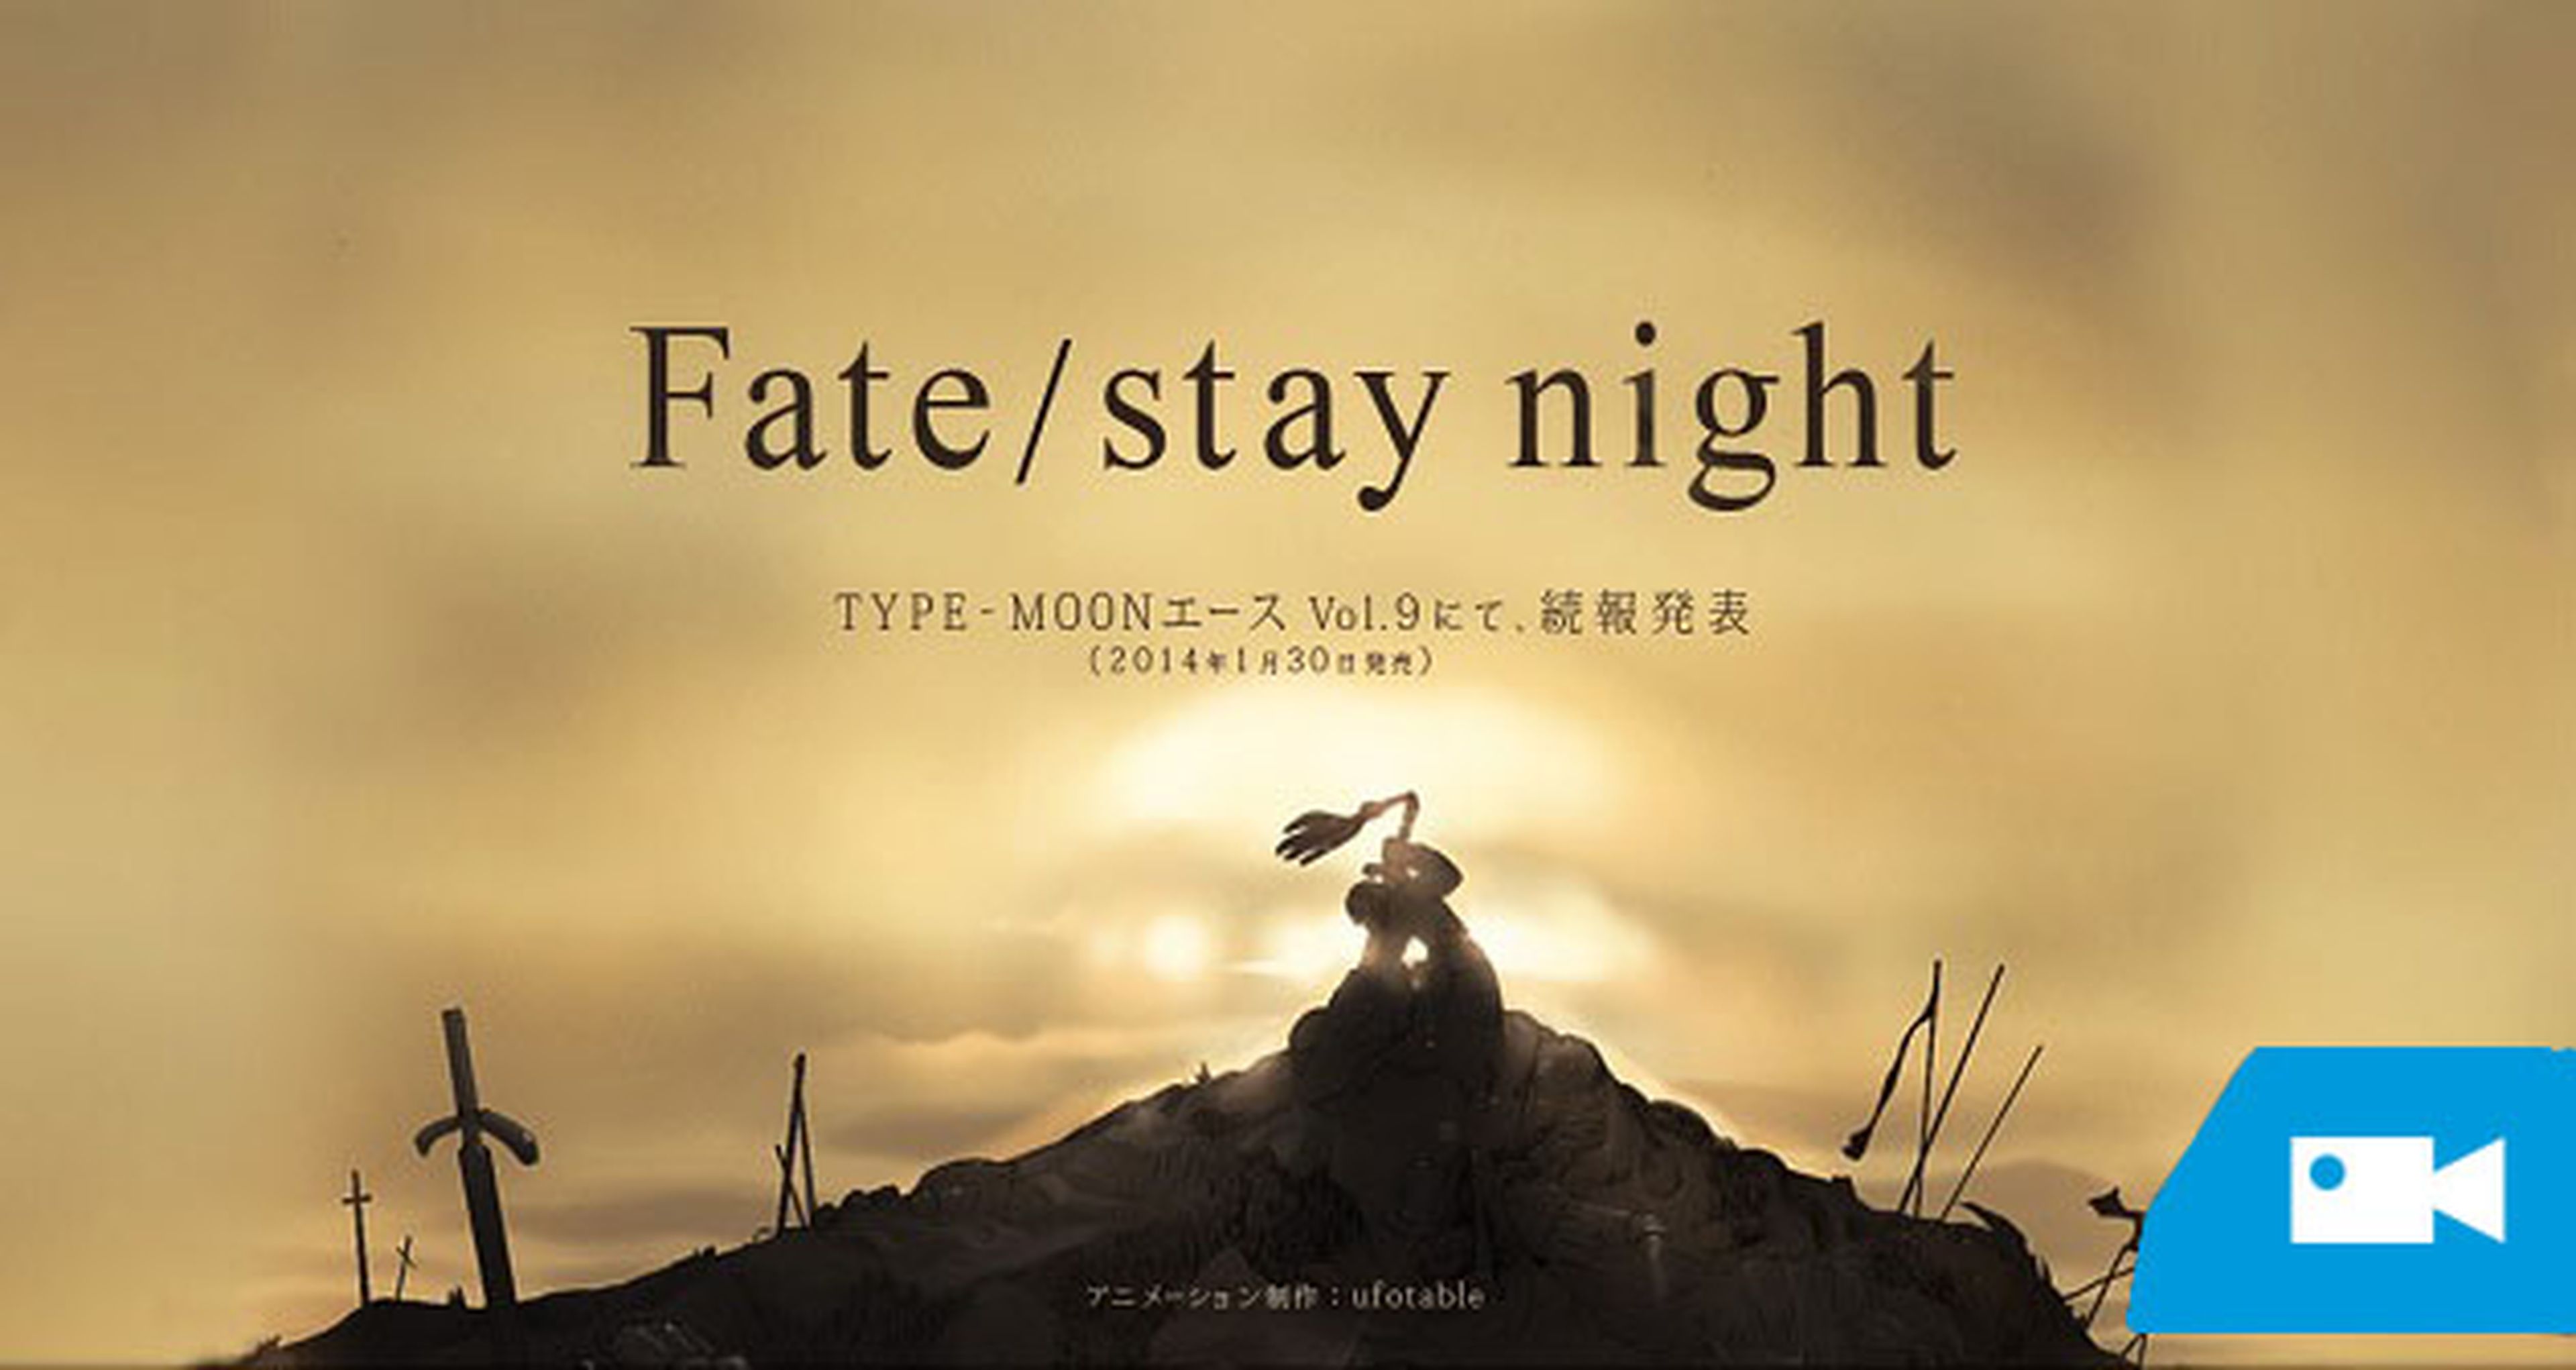 Avance de lo nuevo de Fate/stay night